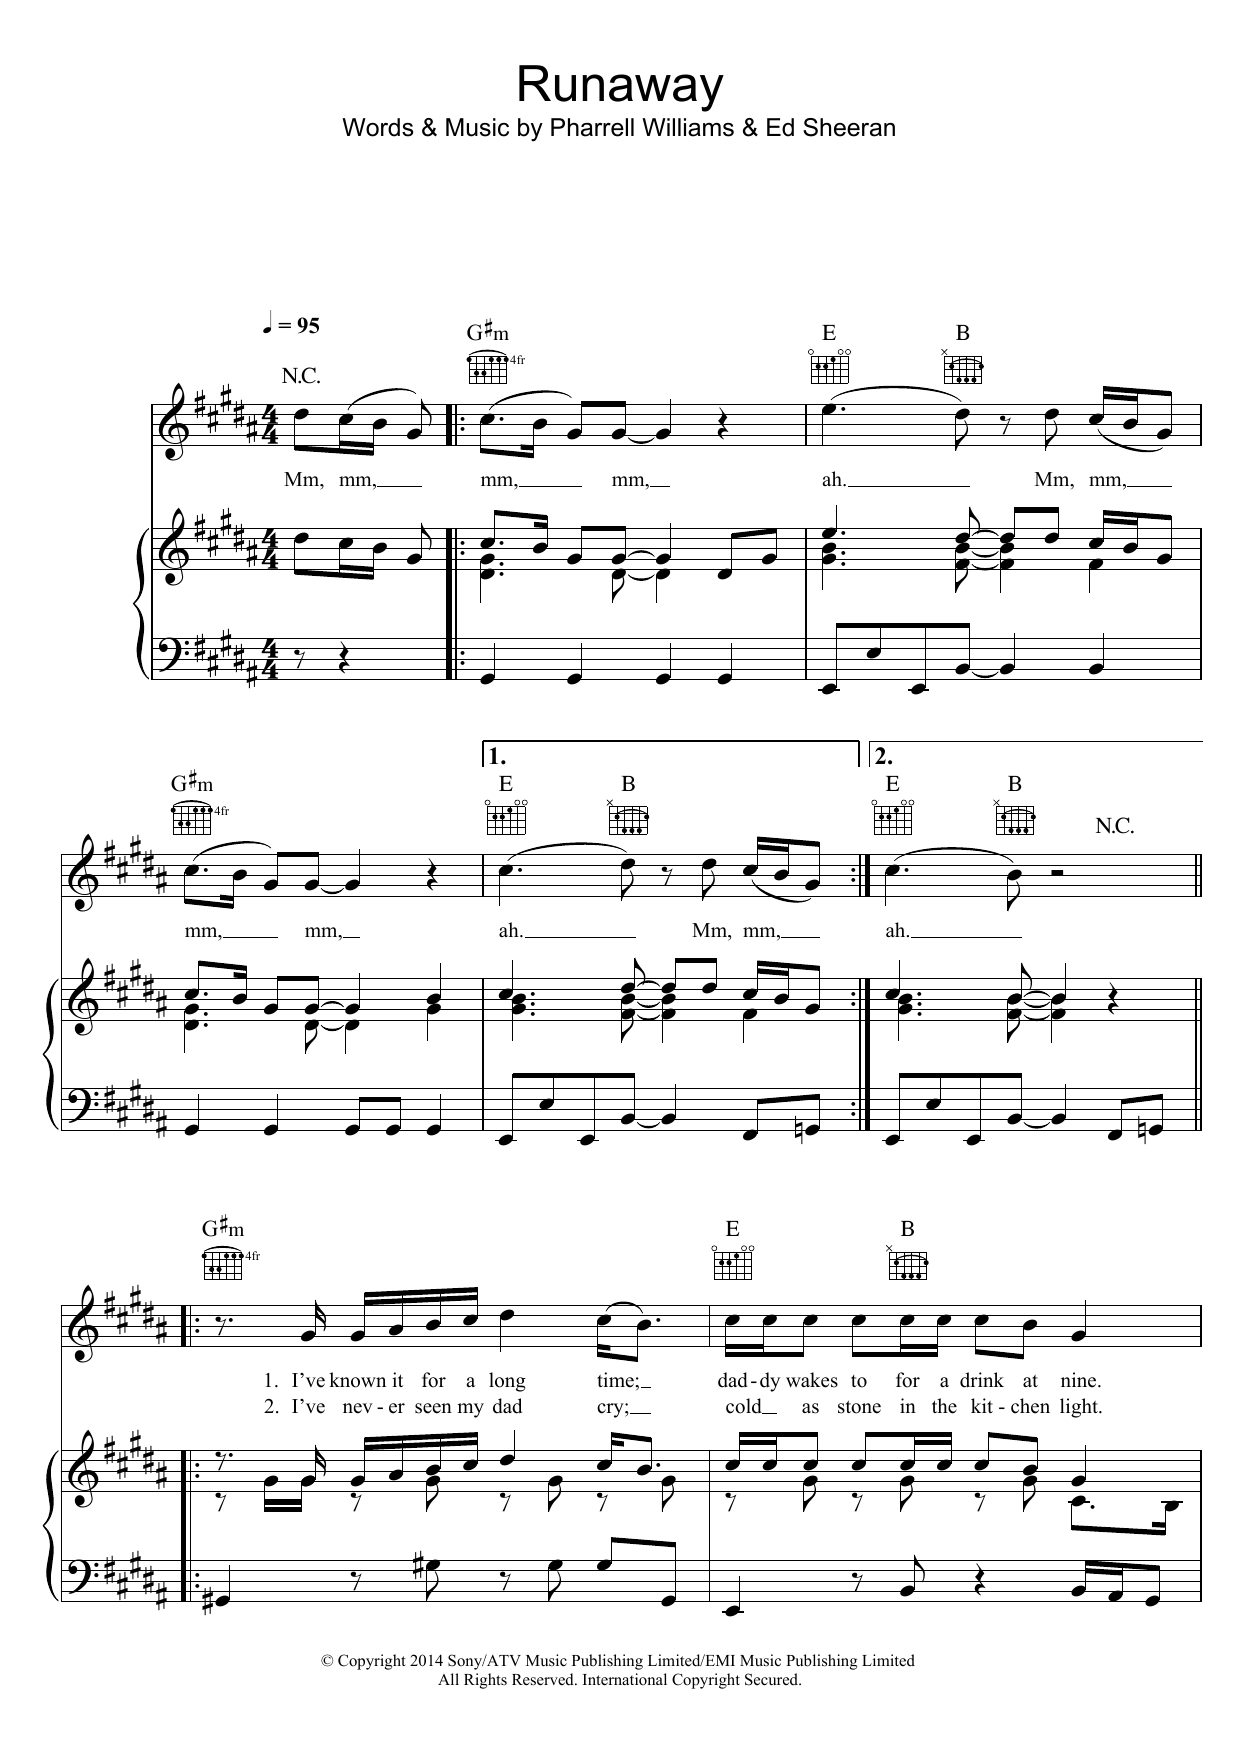 Download Ed Sheeran Runaway Sheet Music and learn how to play Lyrics & Chords PDF digital score in minutes